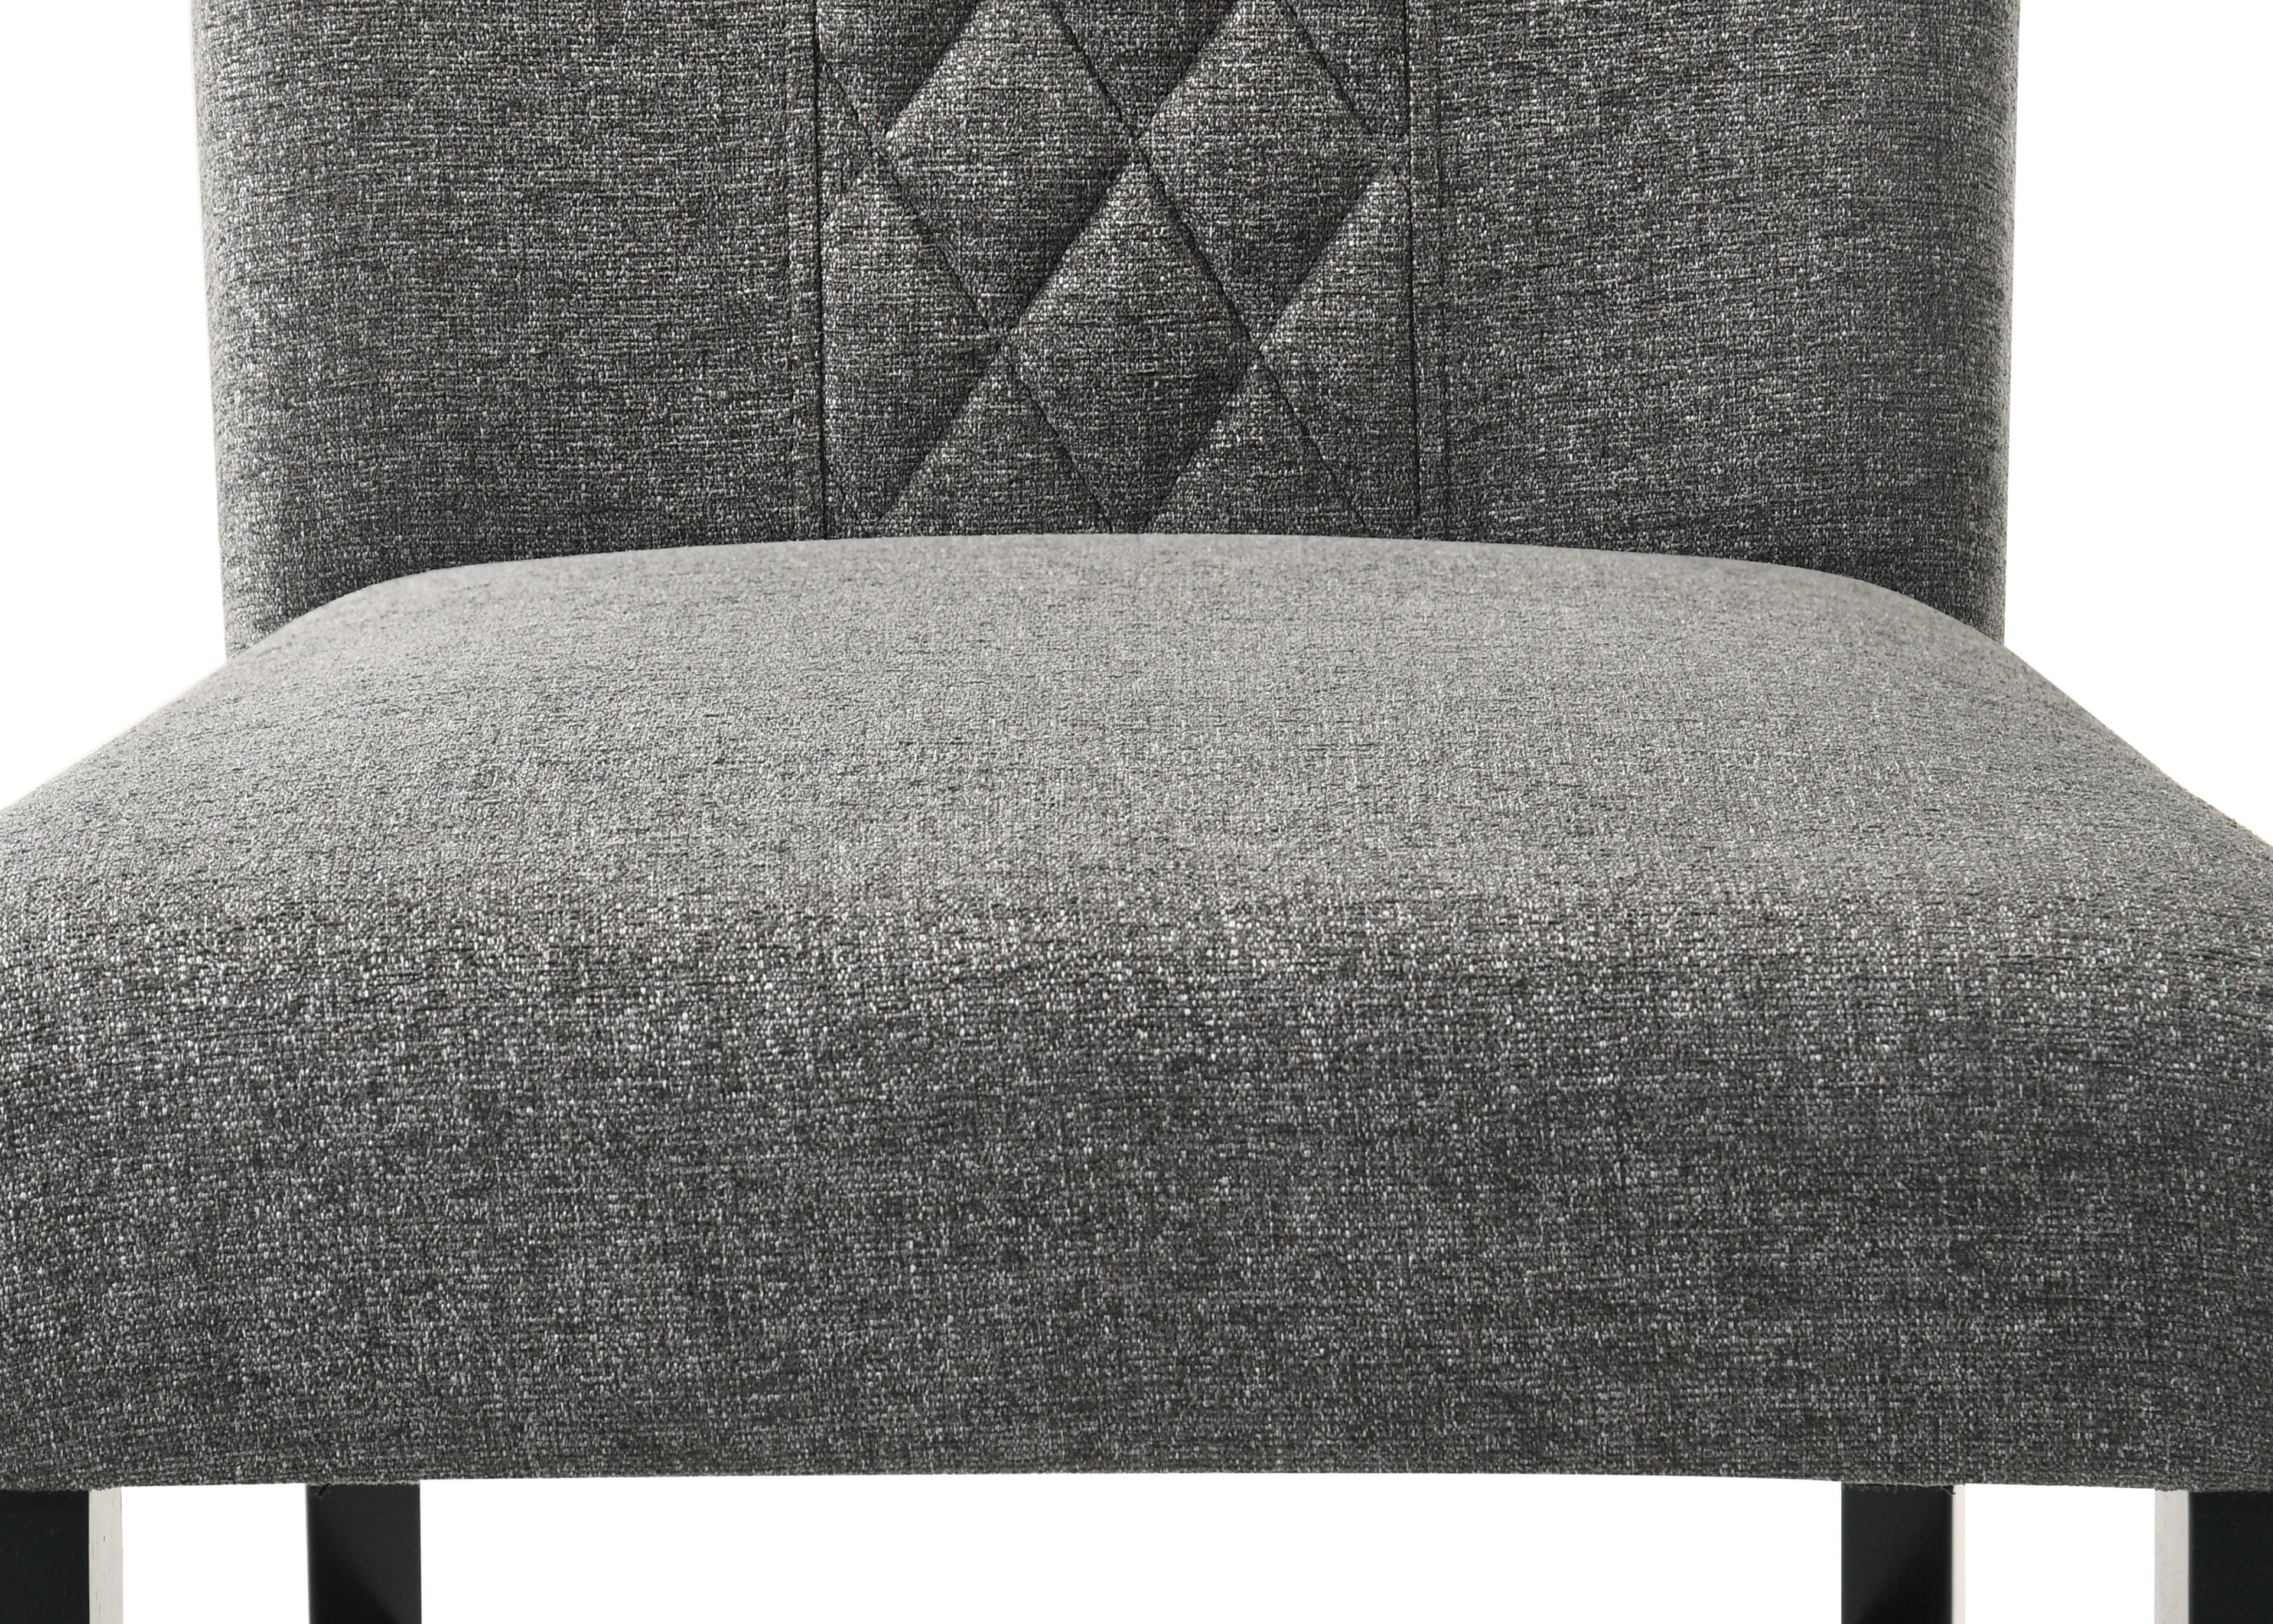 Crown Mark - Arlene - Side Chair (Set of 2) - Gray - 5th Avenue Furniture